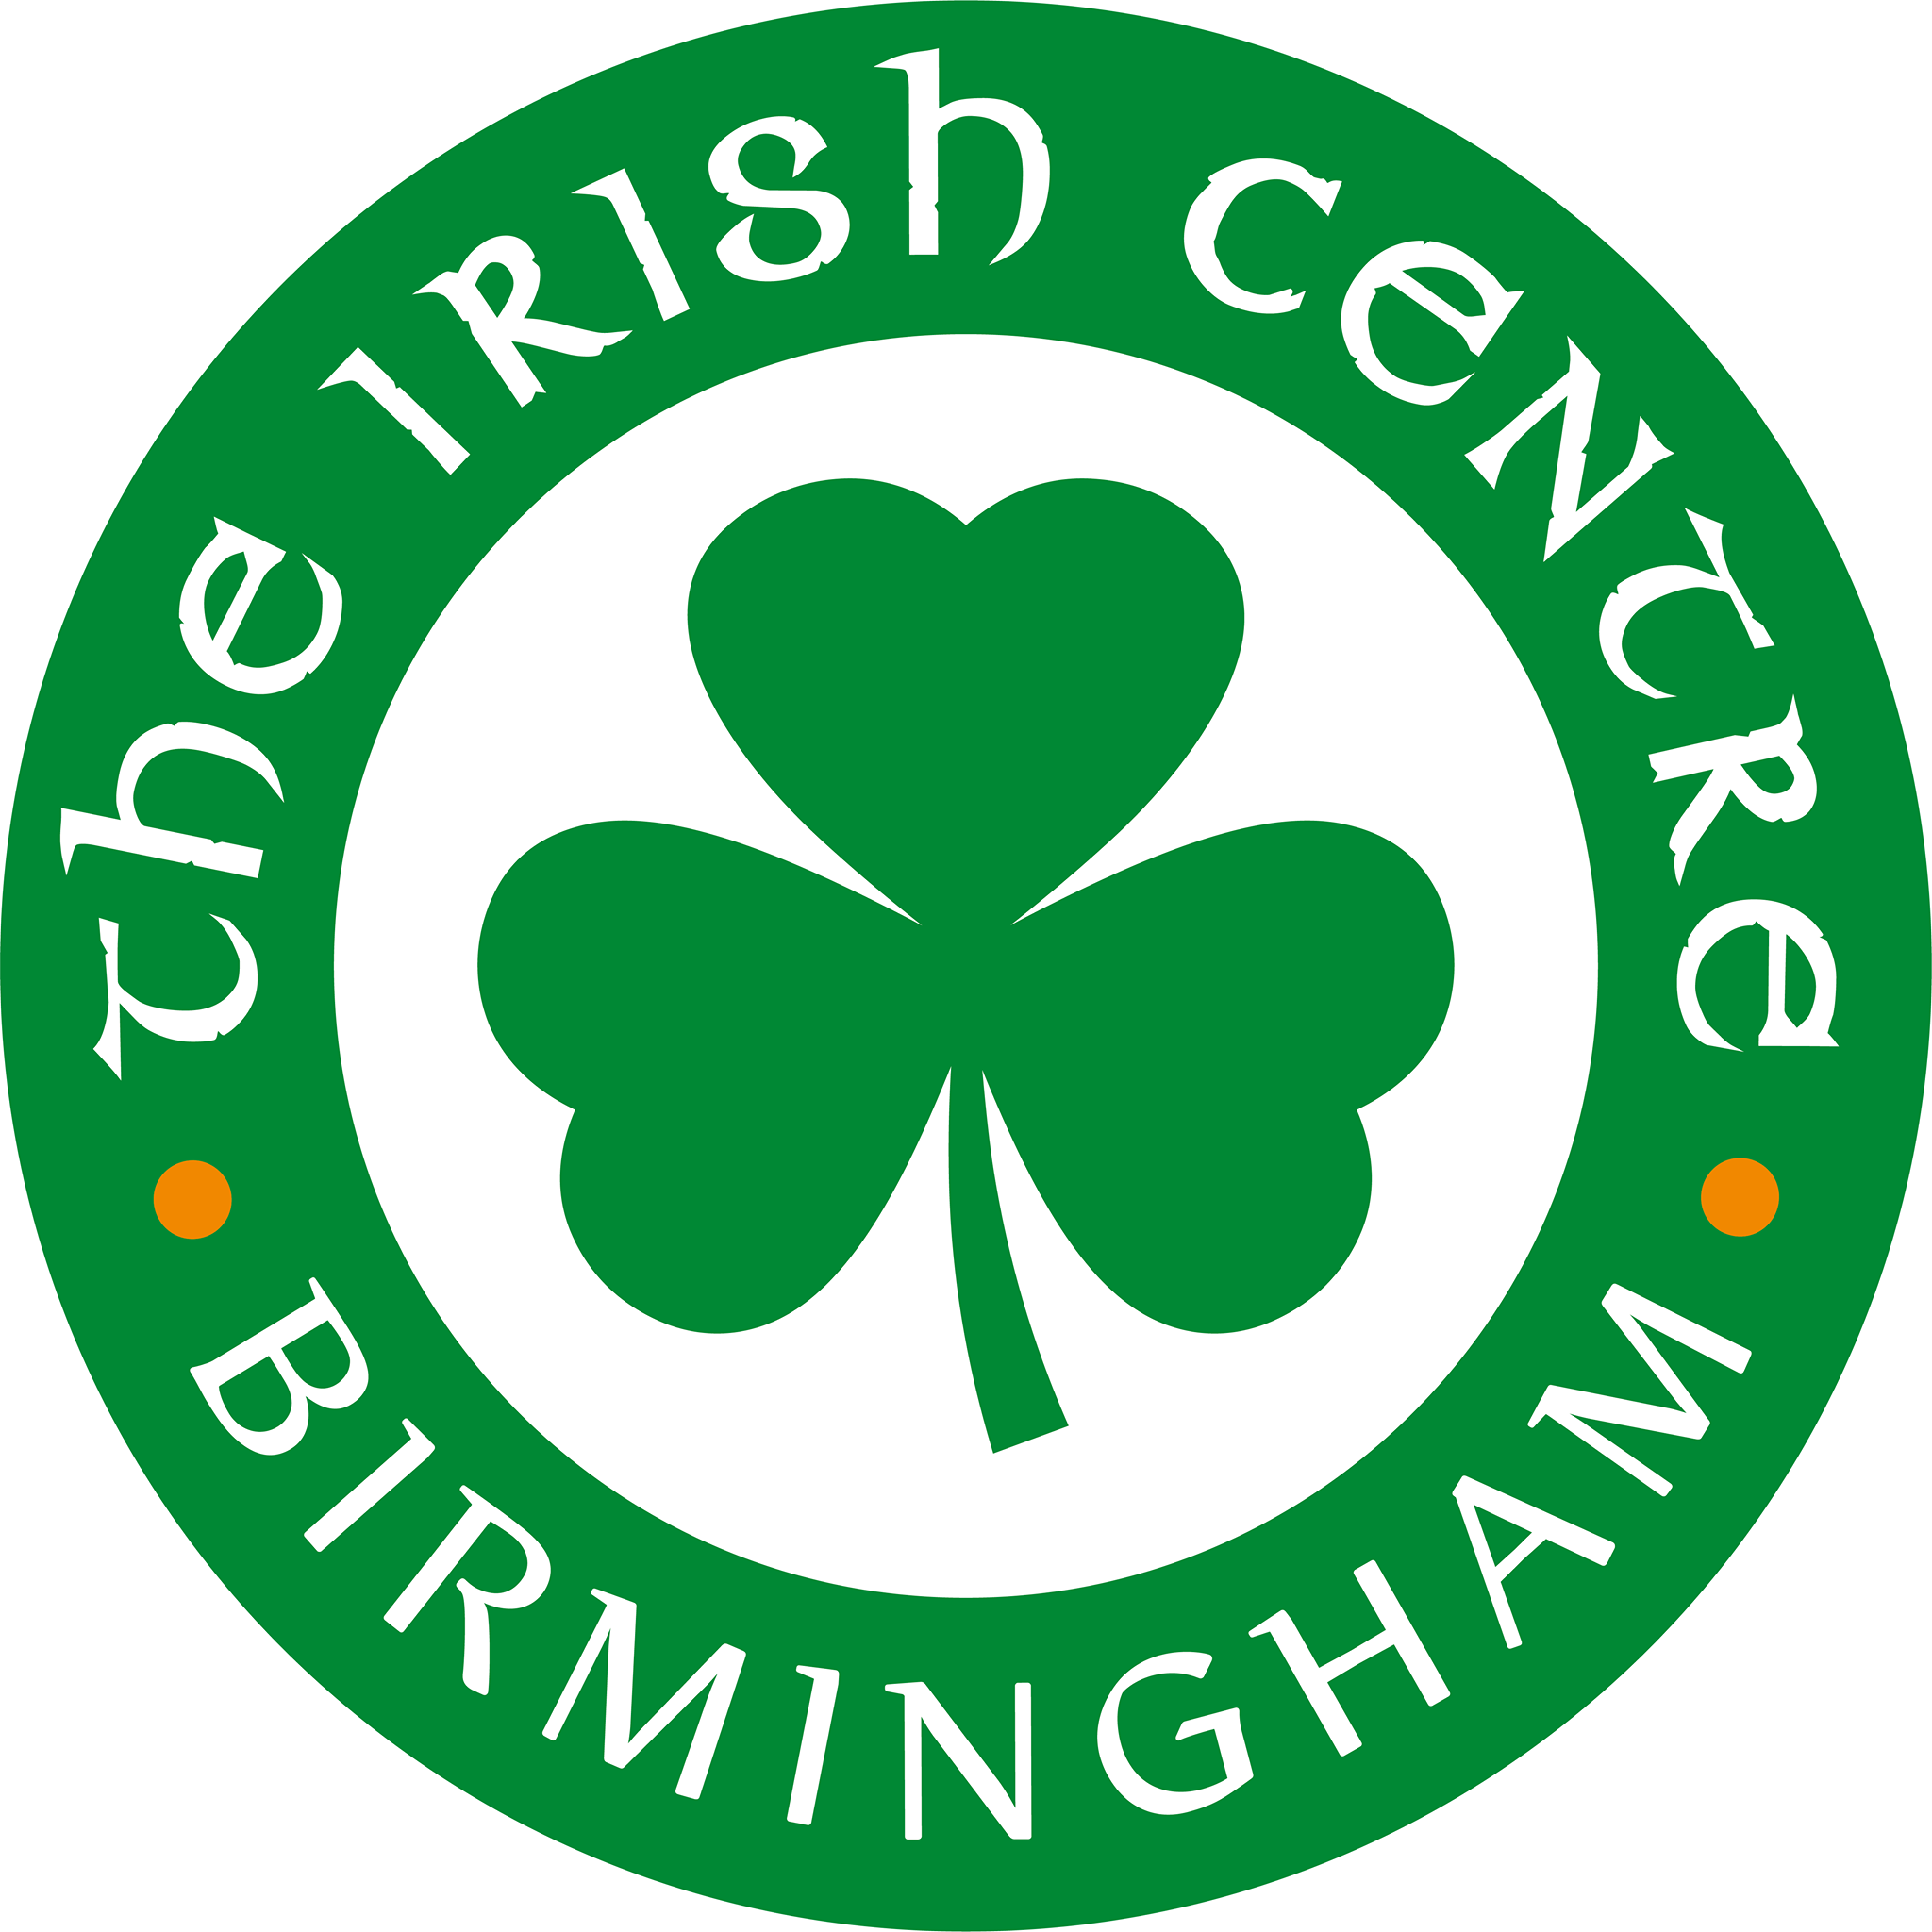 The New Irish Centre Birmingham